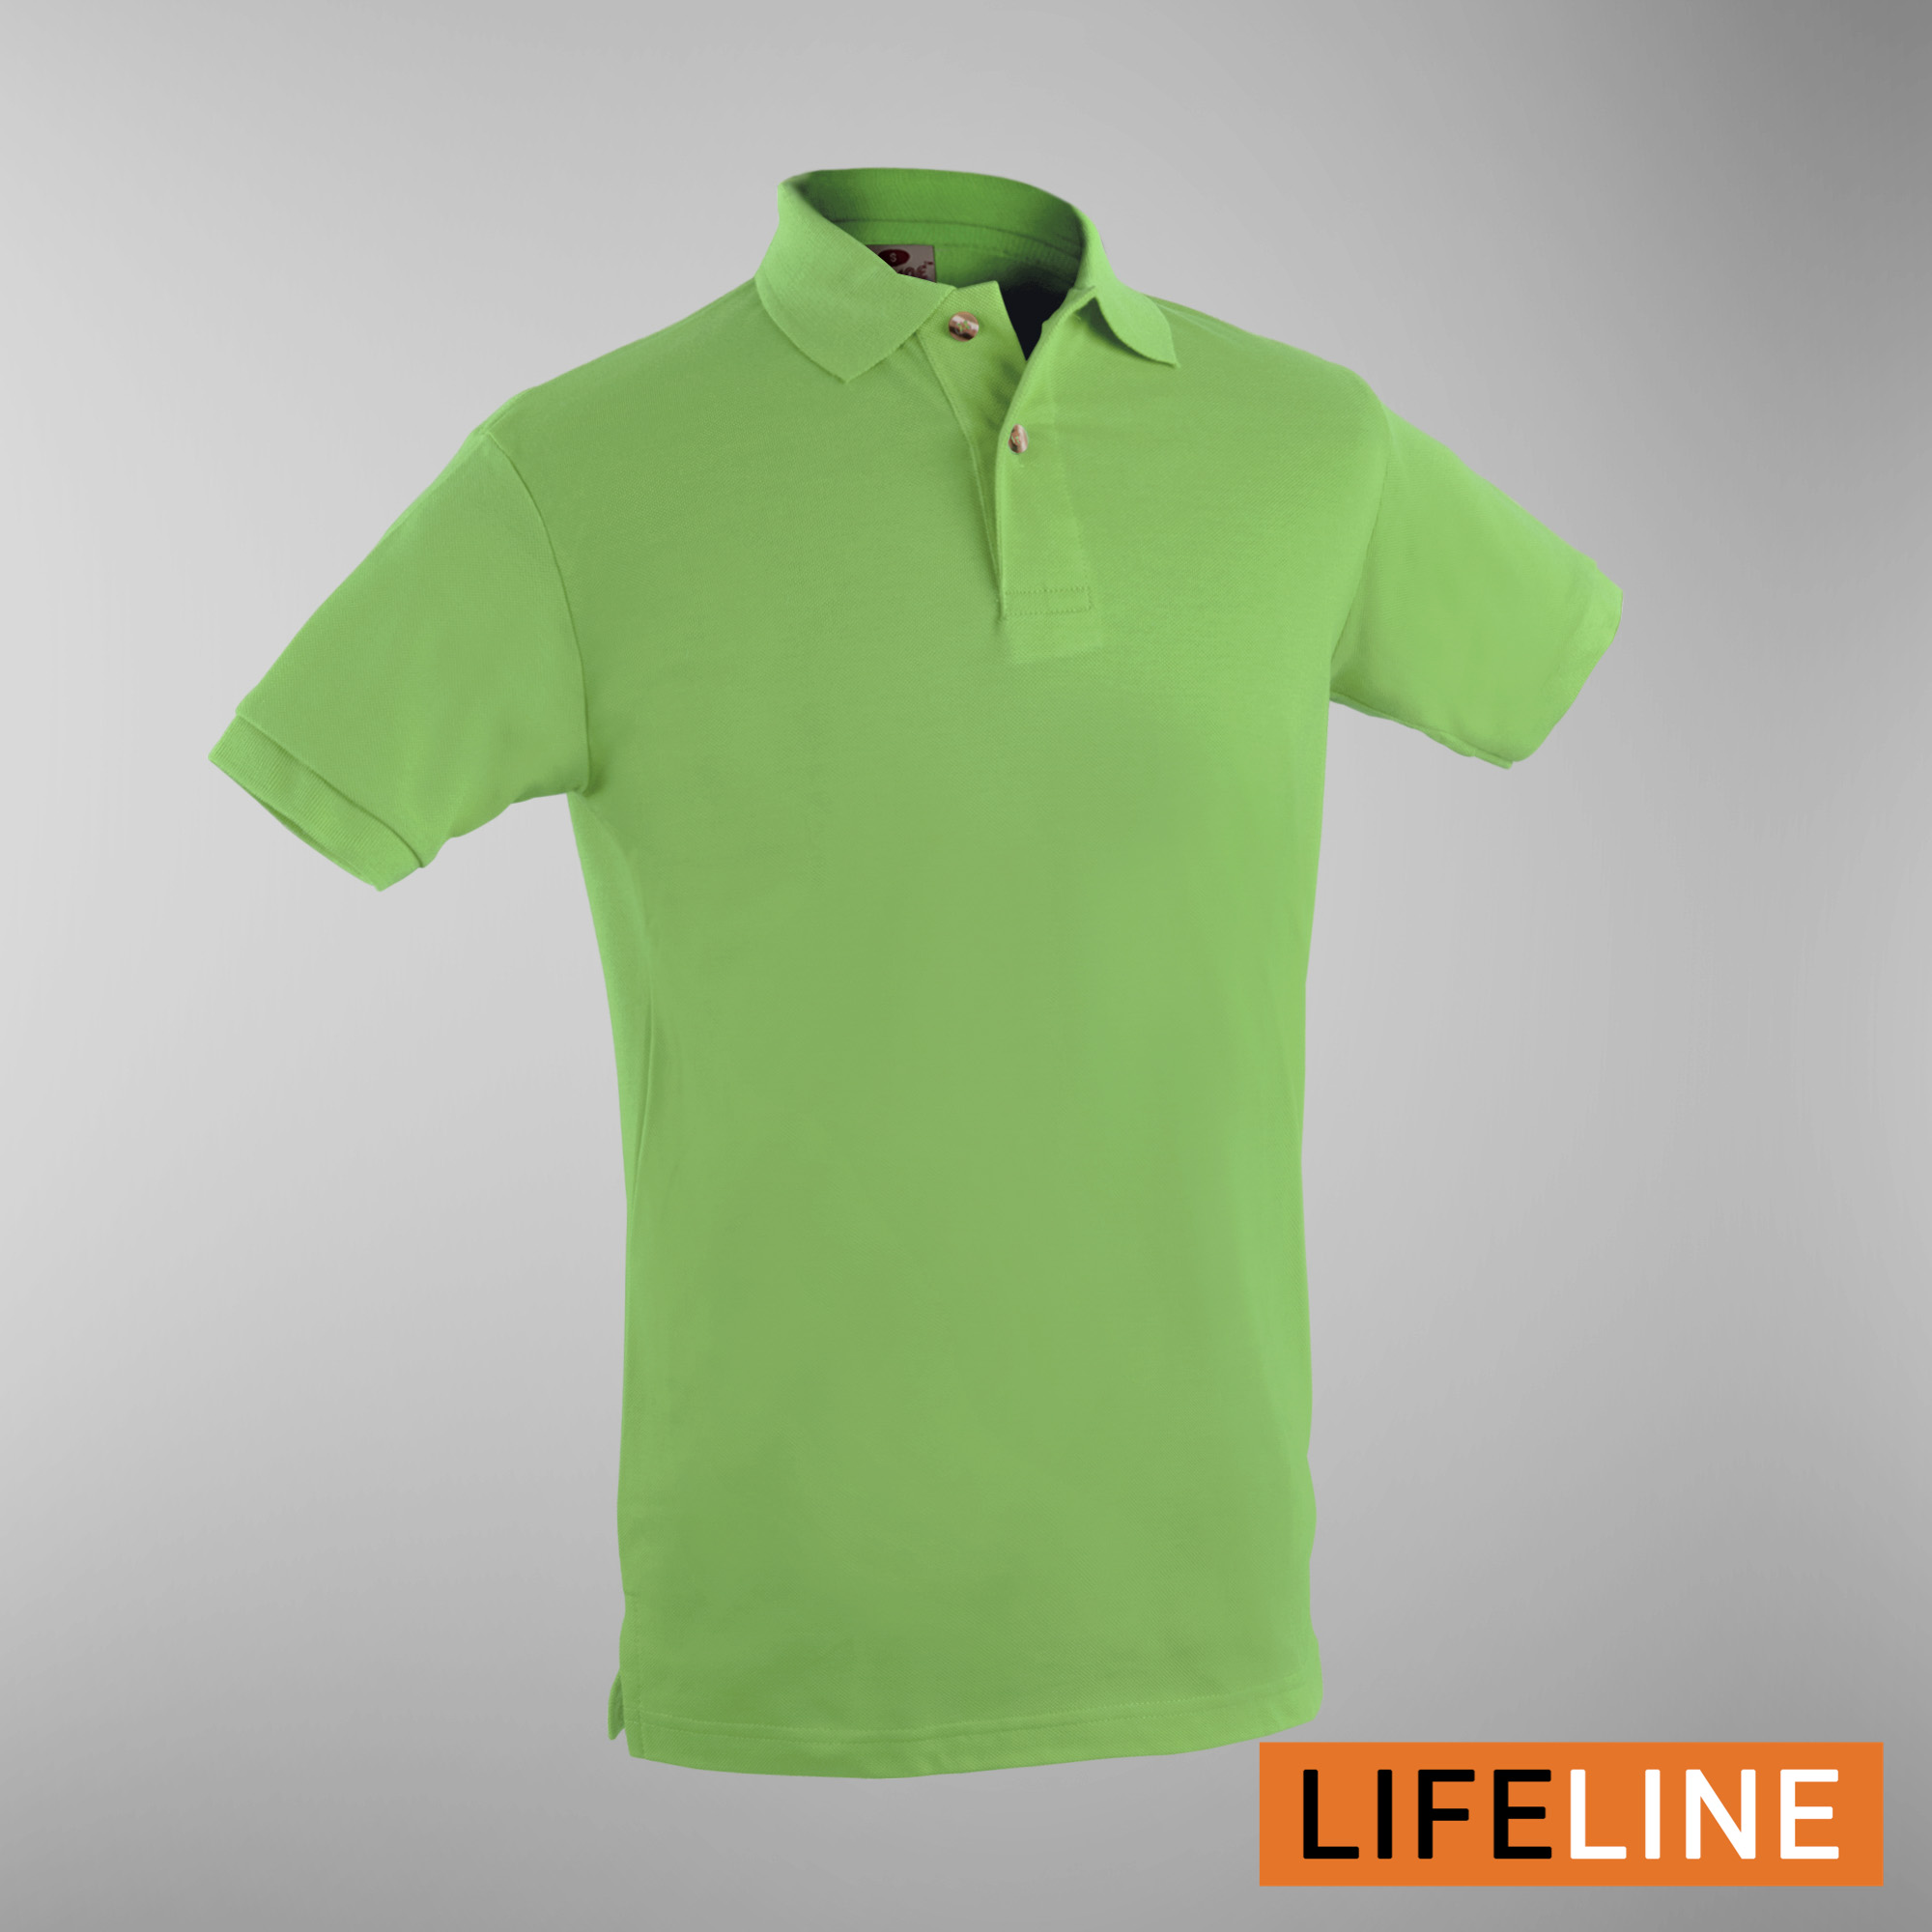 Lifeline Men’s Poloshirt (Avocado Green)